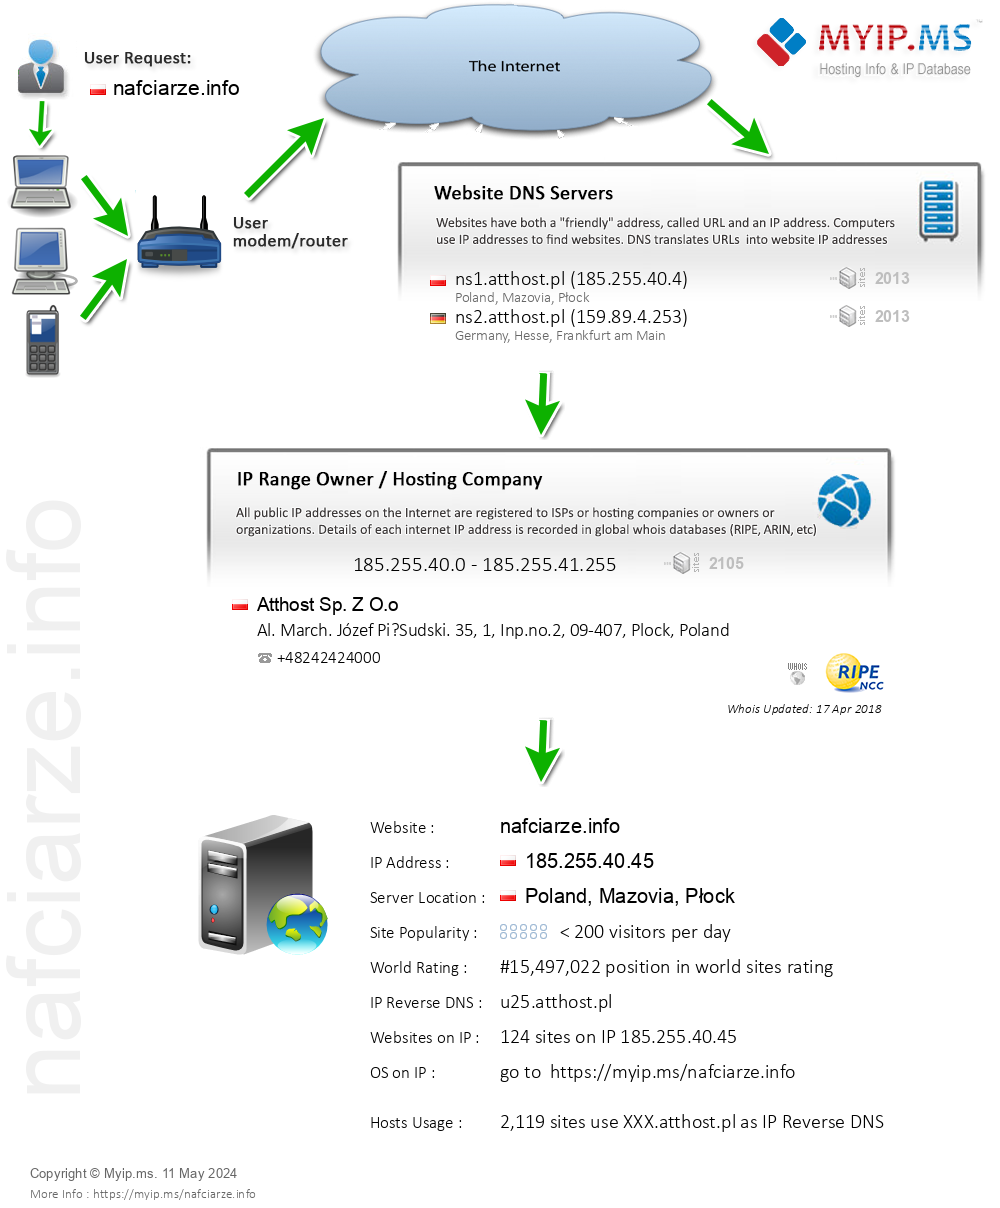 Nafciarze.info - Website Hosting Visual IP Diagram